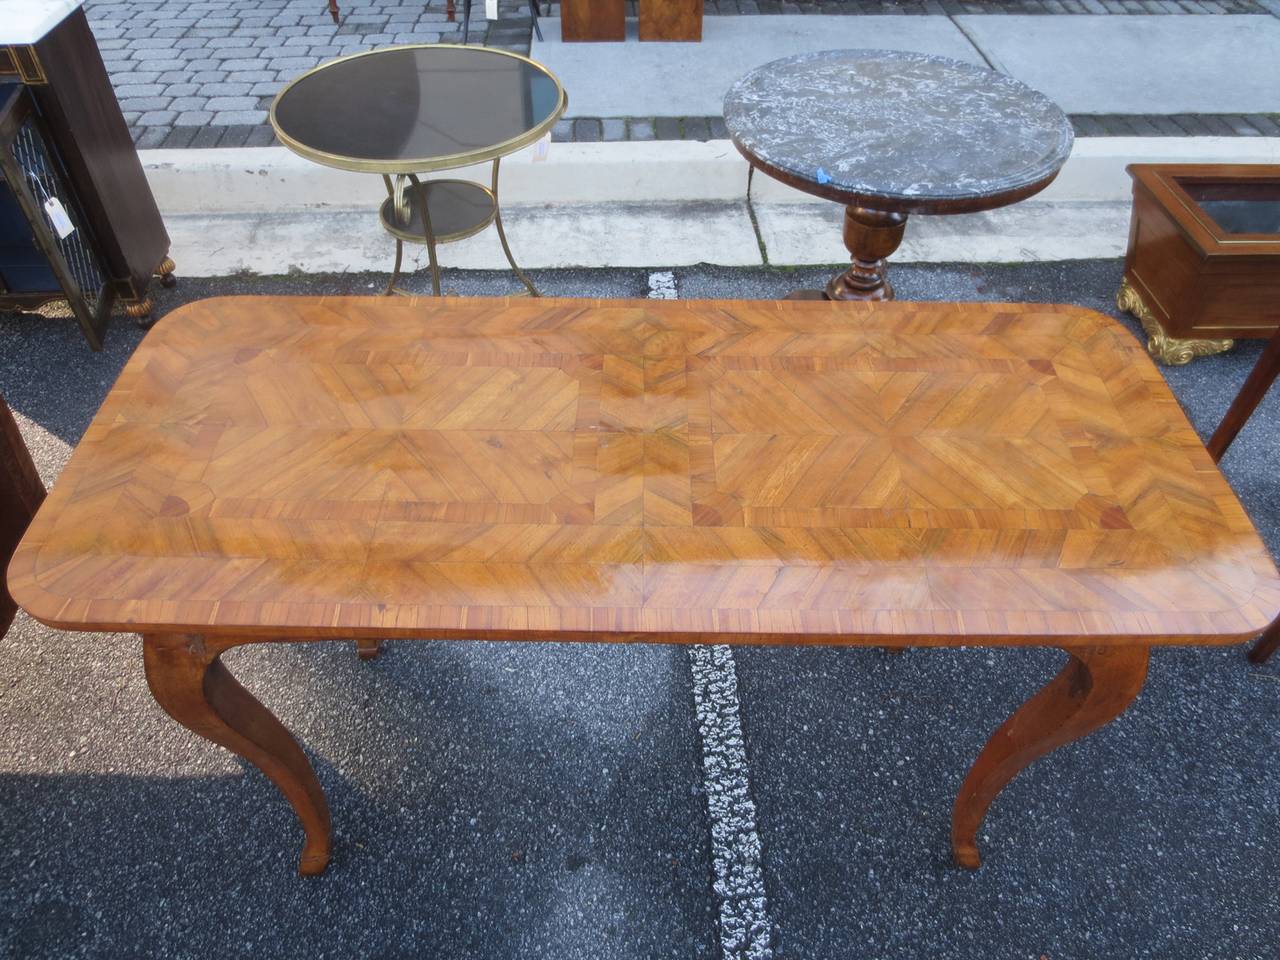 19th century Italian inlaid console table, beautiful patina.